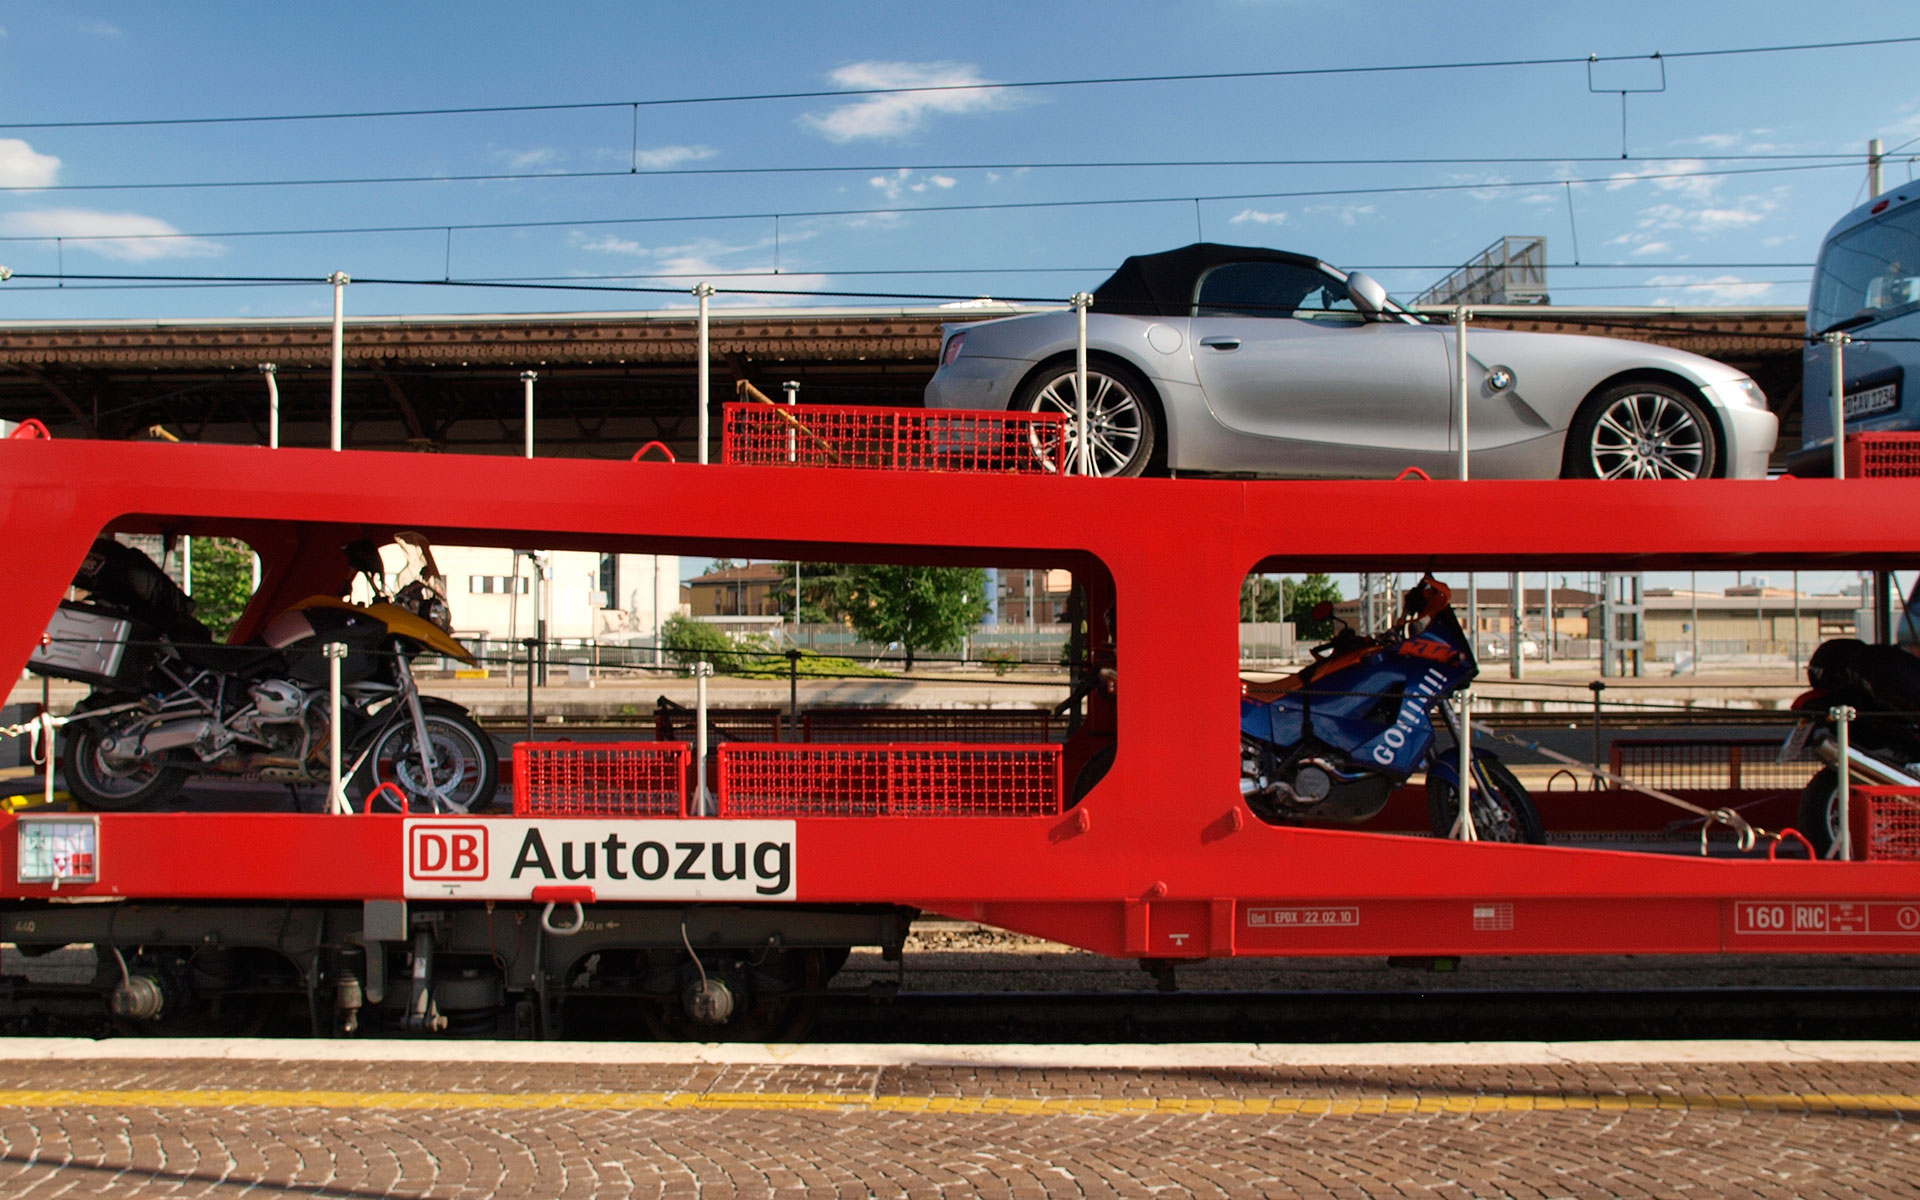 A DB Autozug car train (photo © hidden europe).